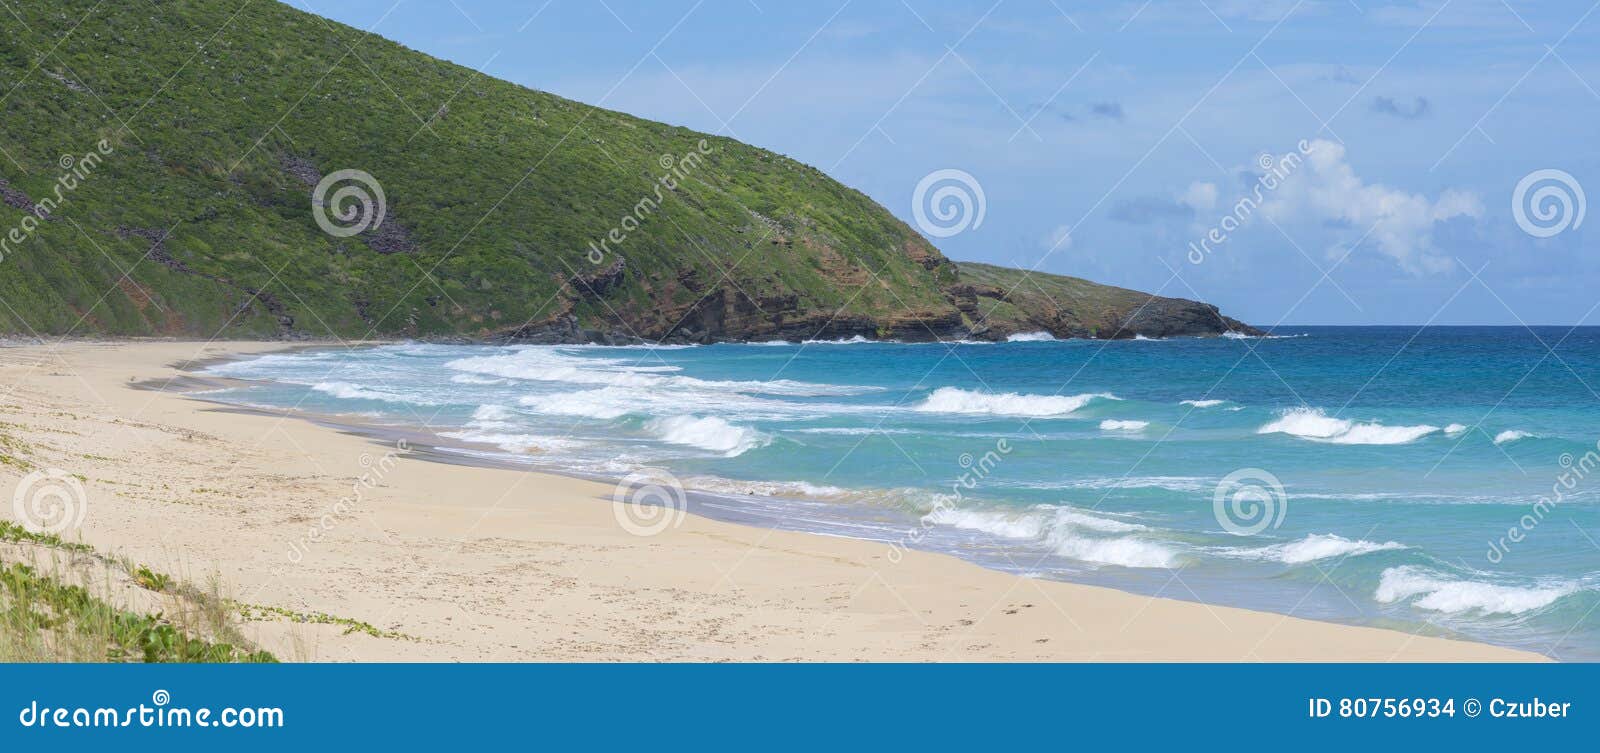 panoramic tropical caribbean beach